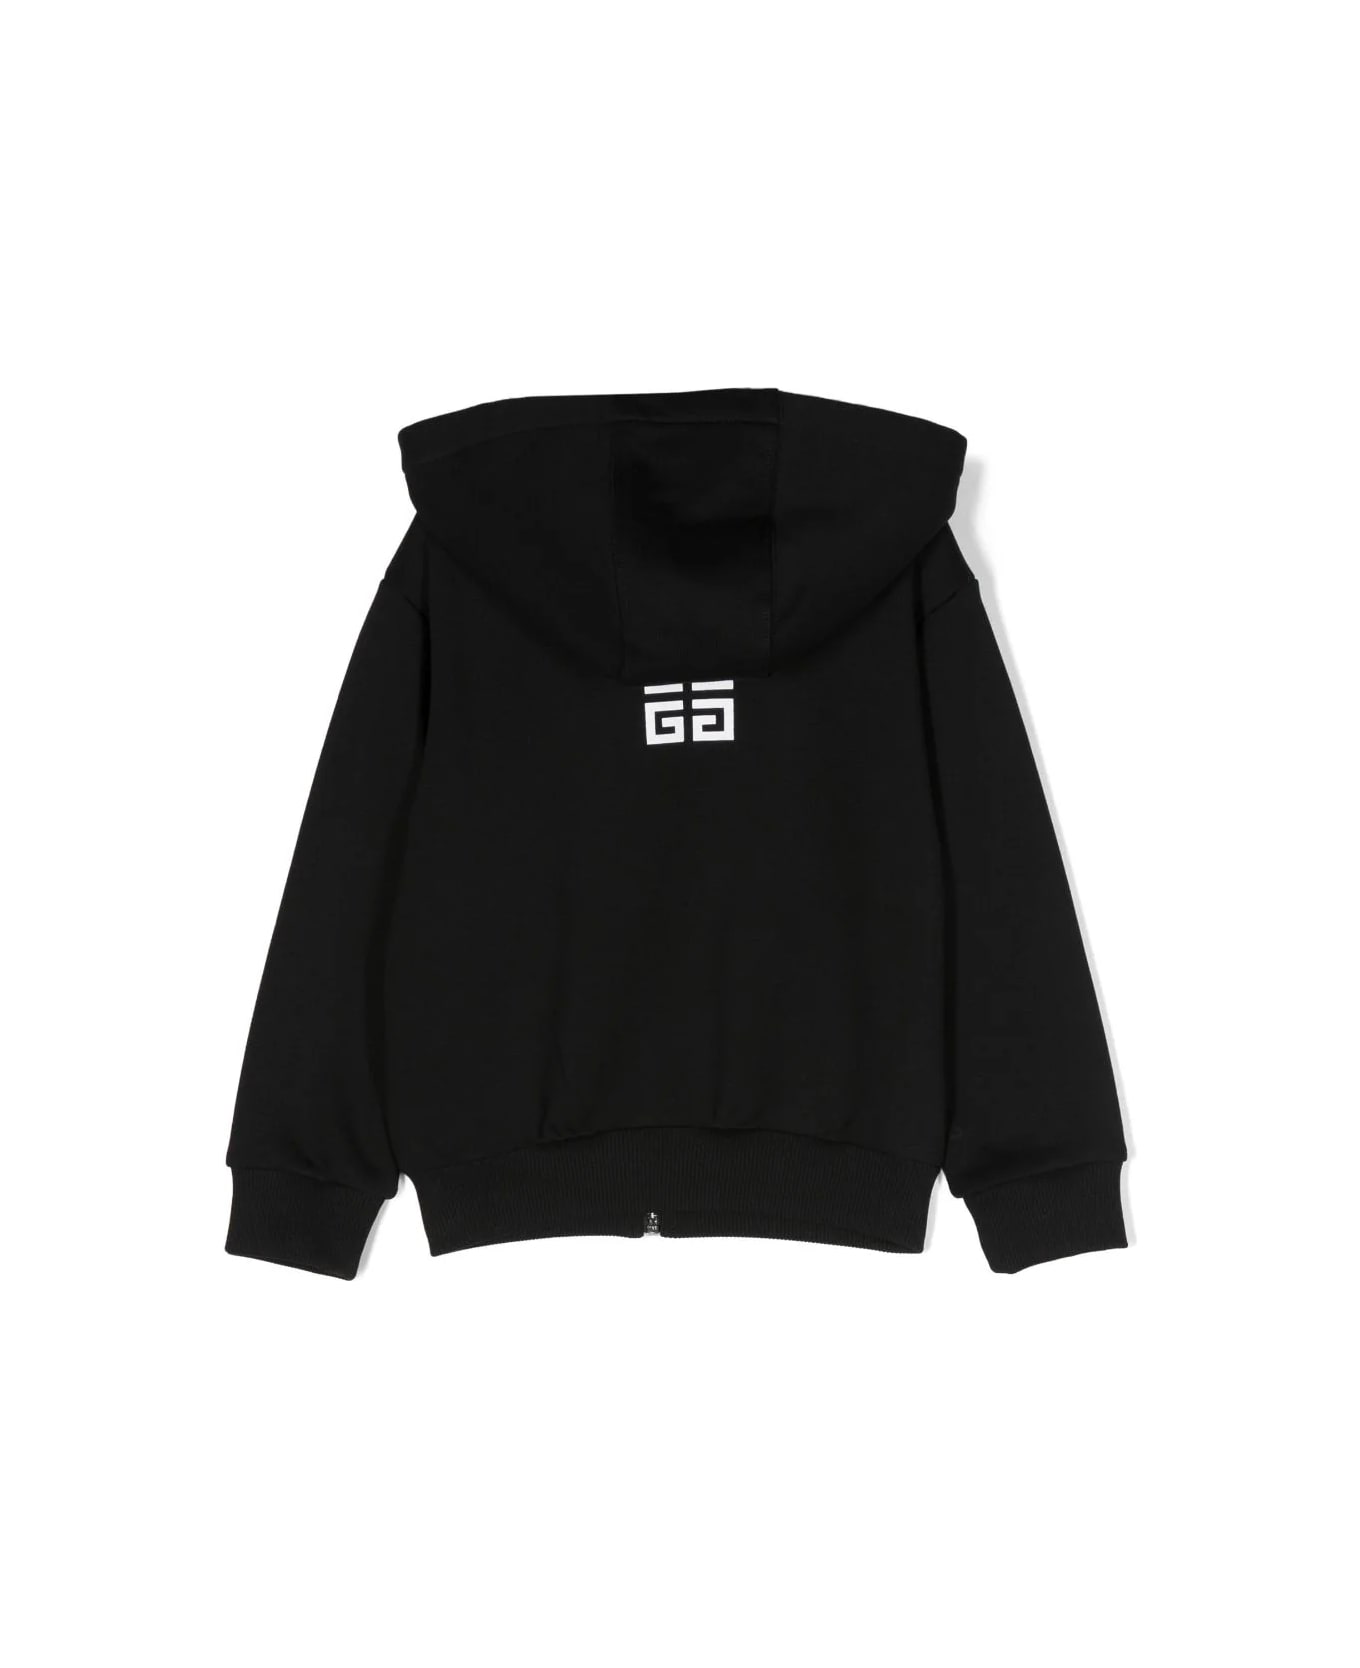 Givenchy Sweatshirt With Print - B Nero